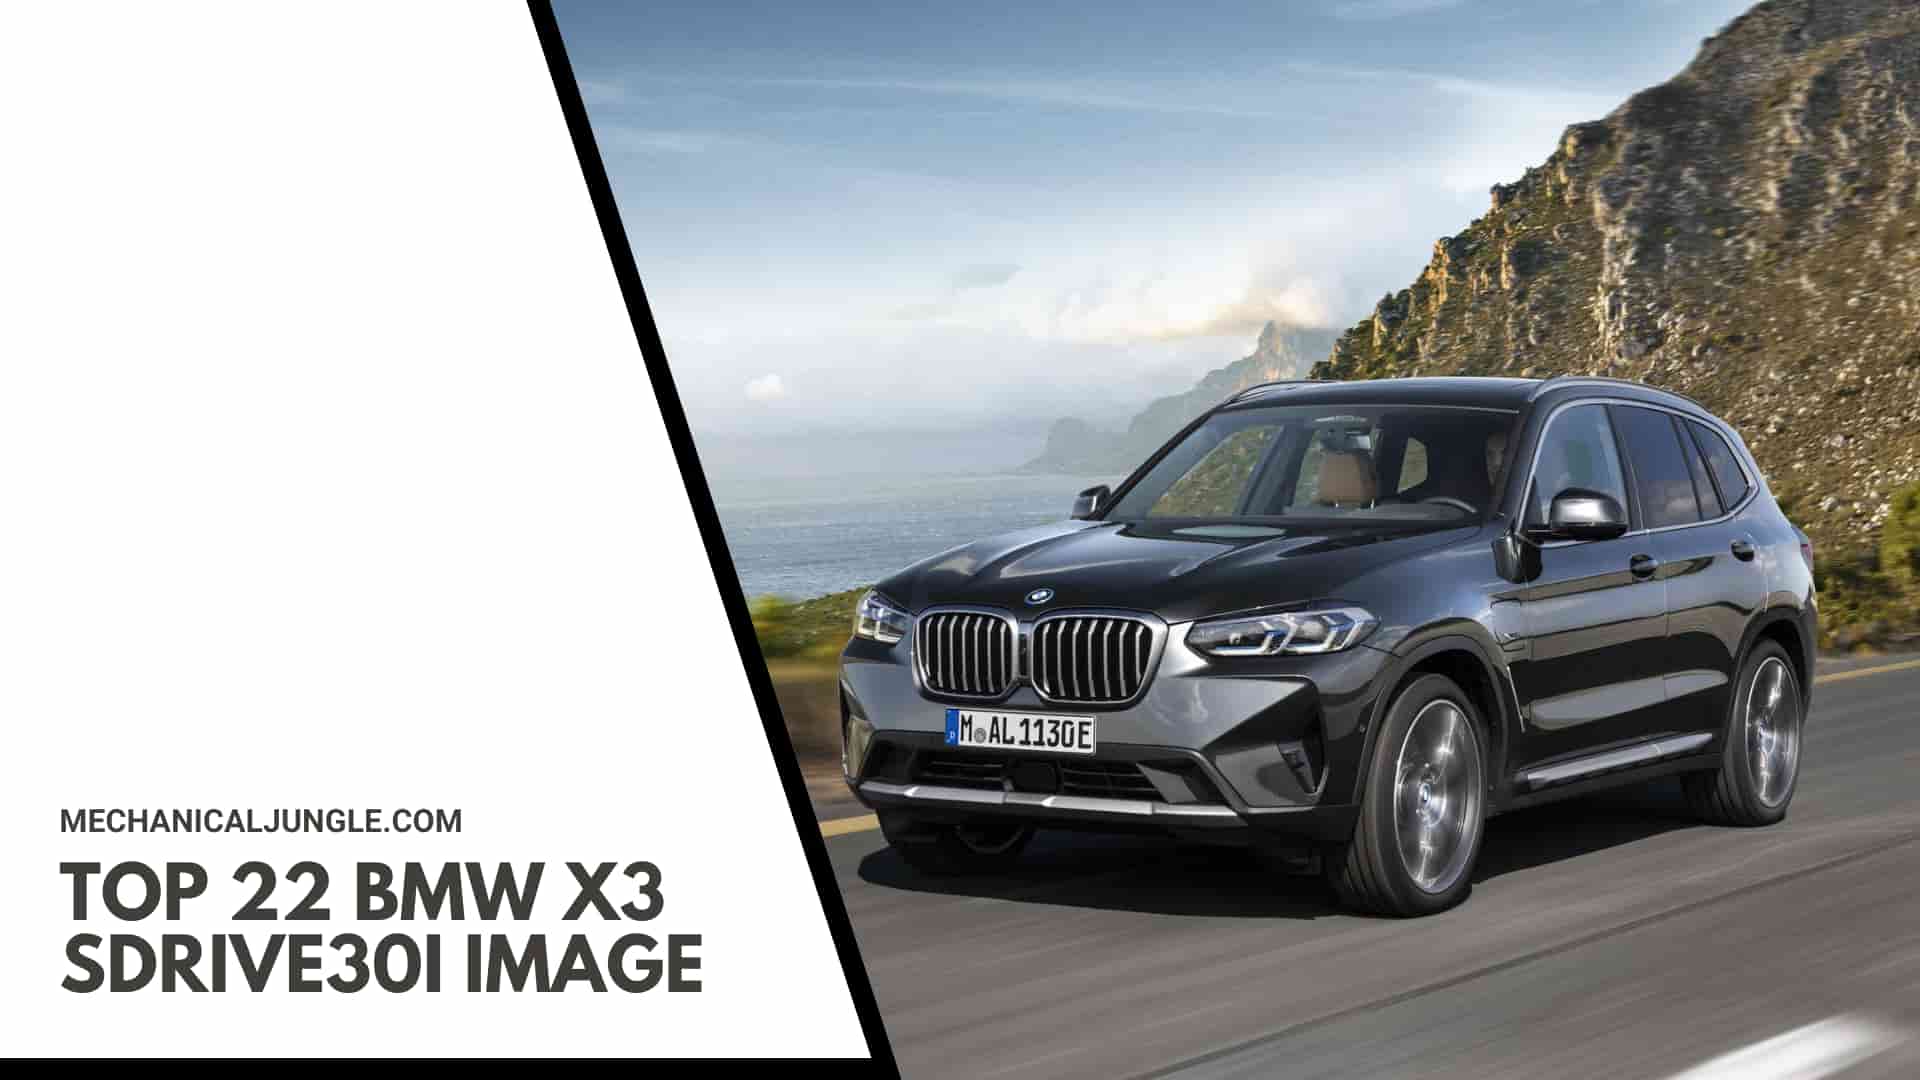 Top 22 BMW X3 sDrive30i Image